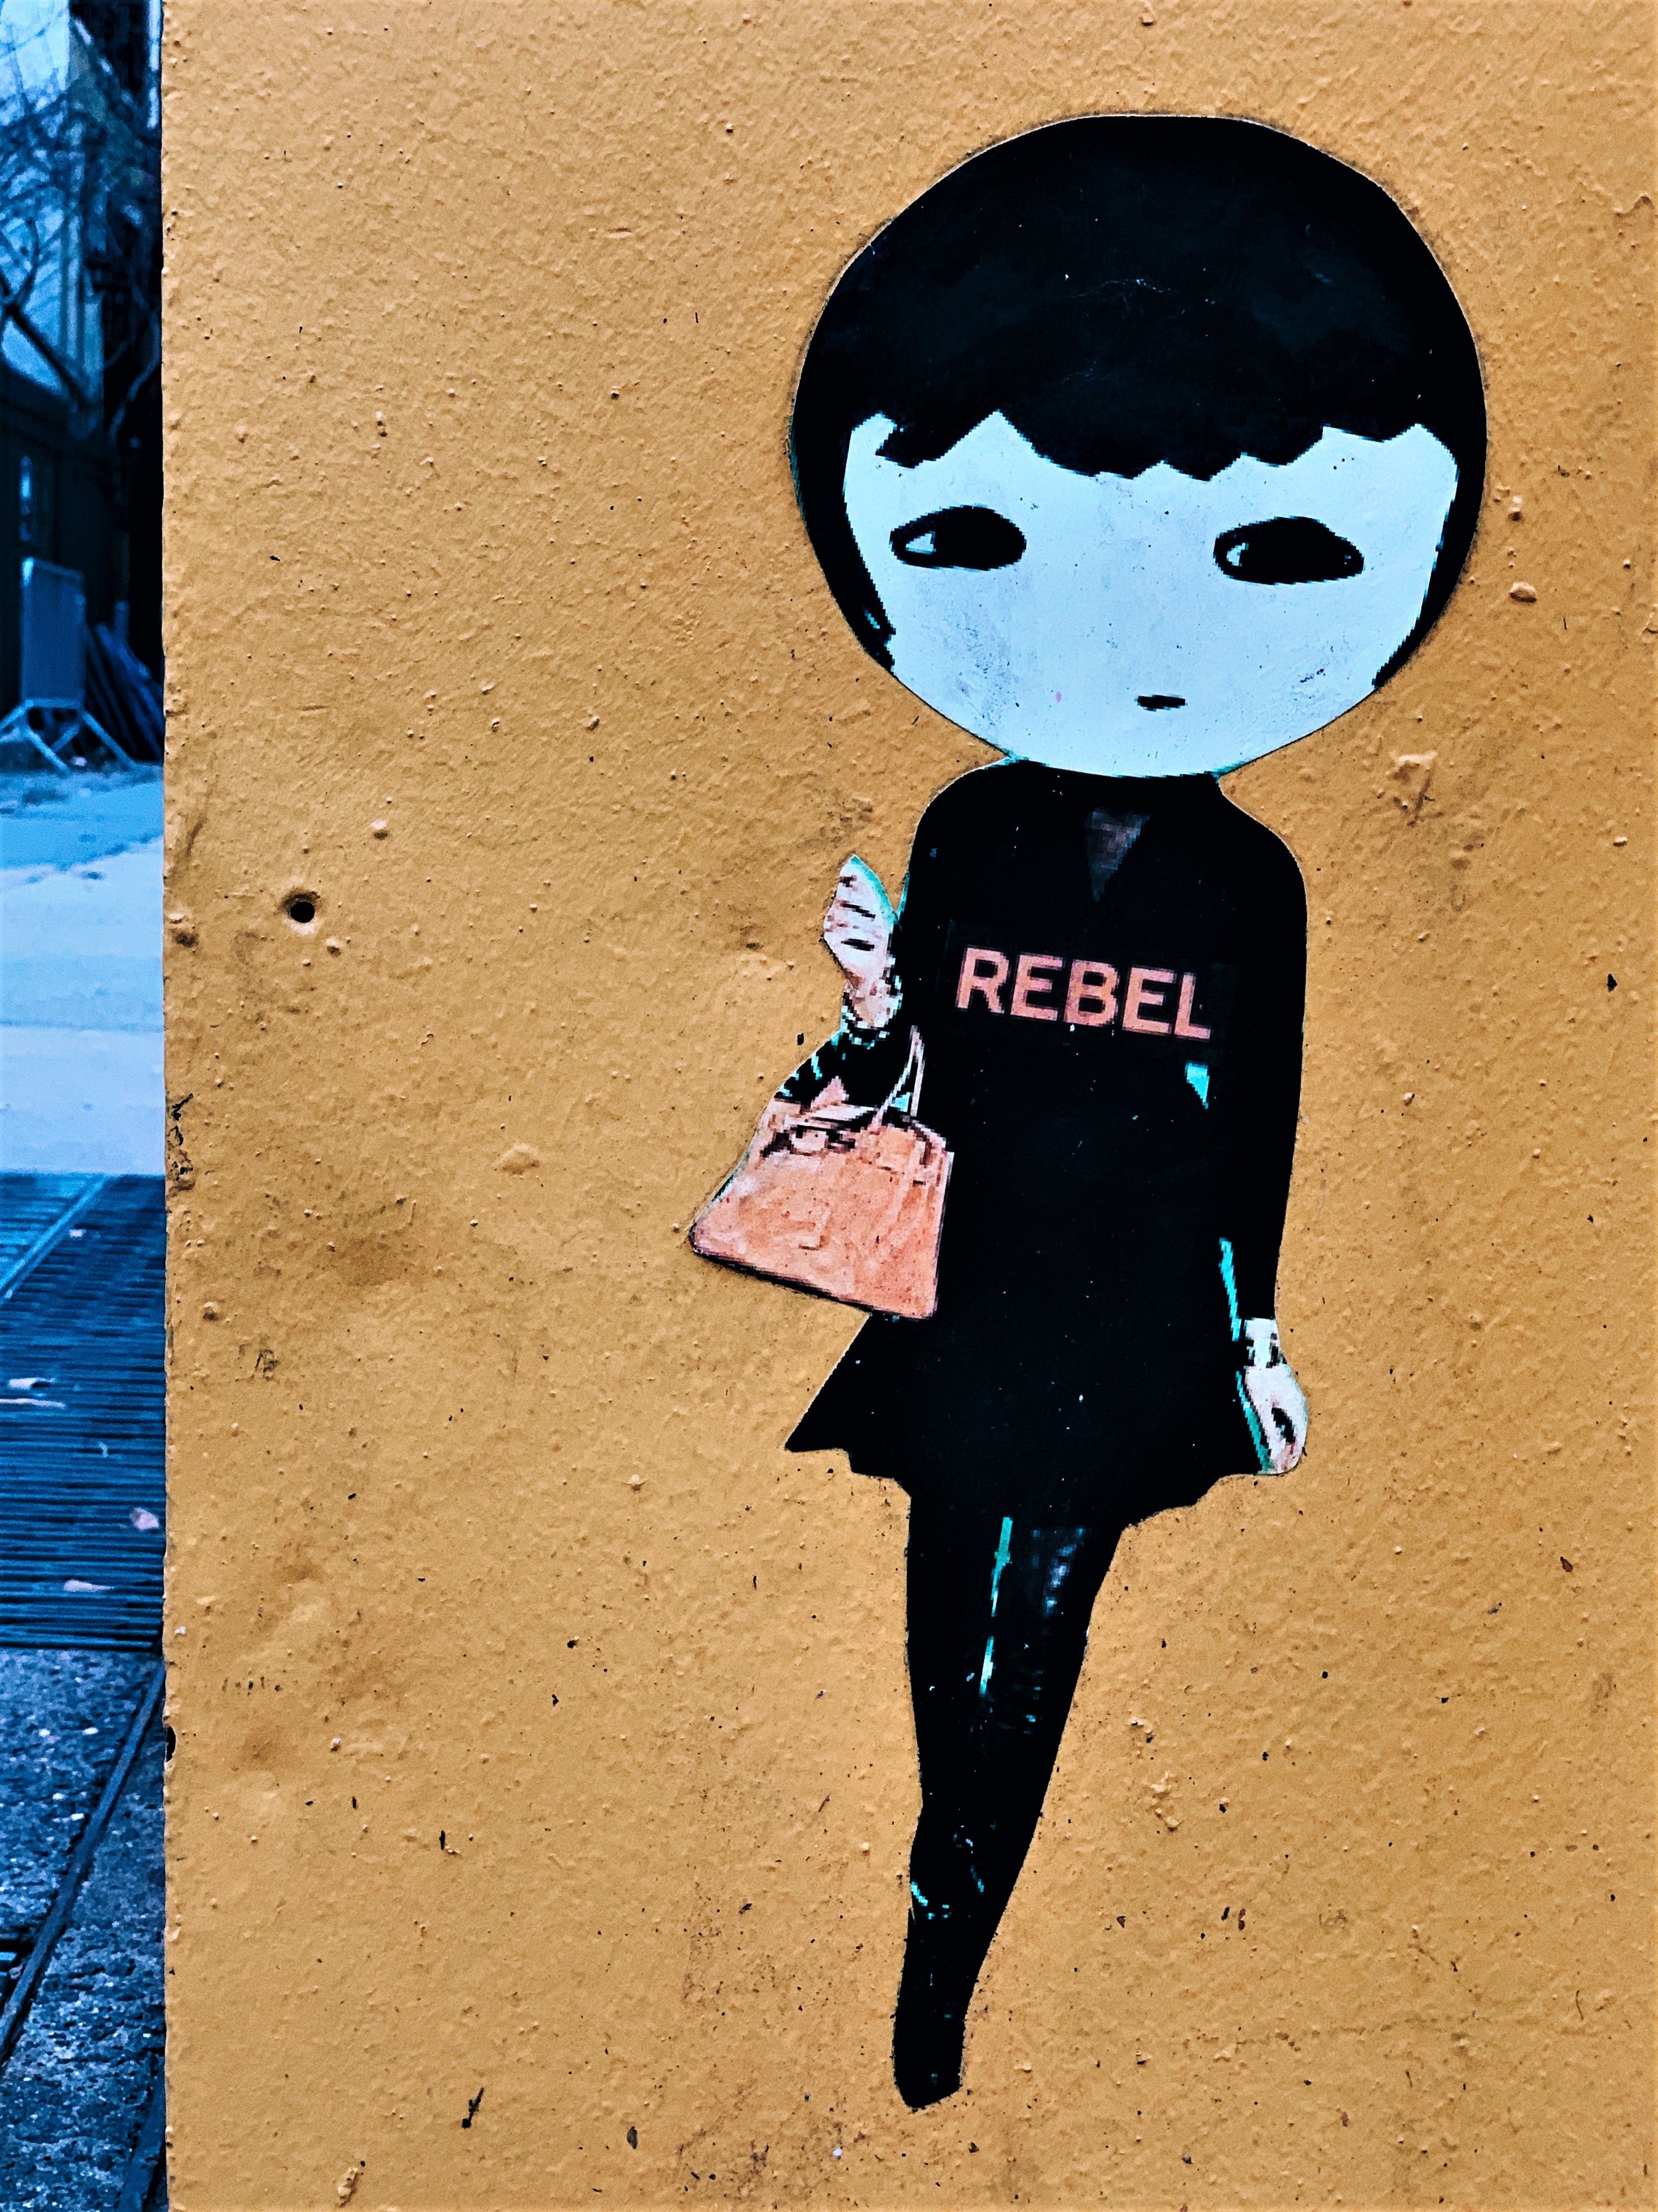 Rebel mural on wall